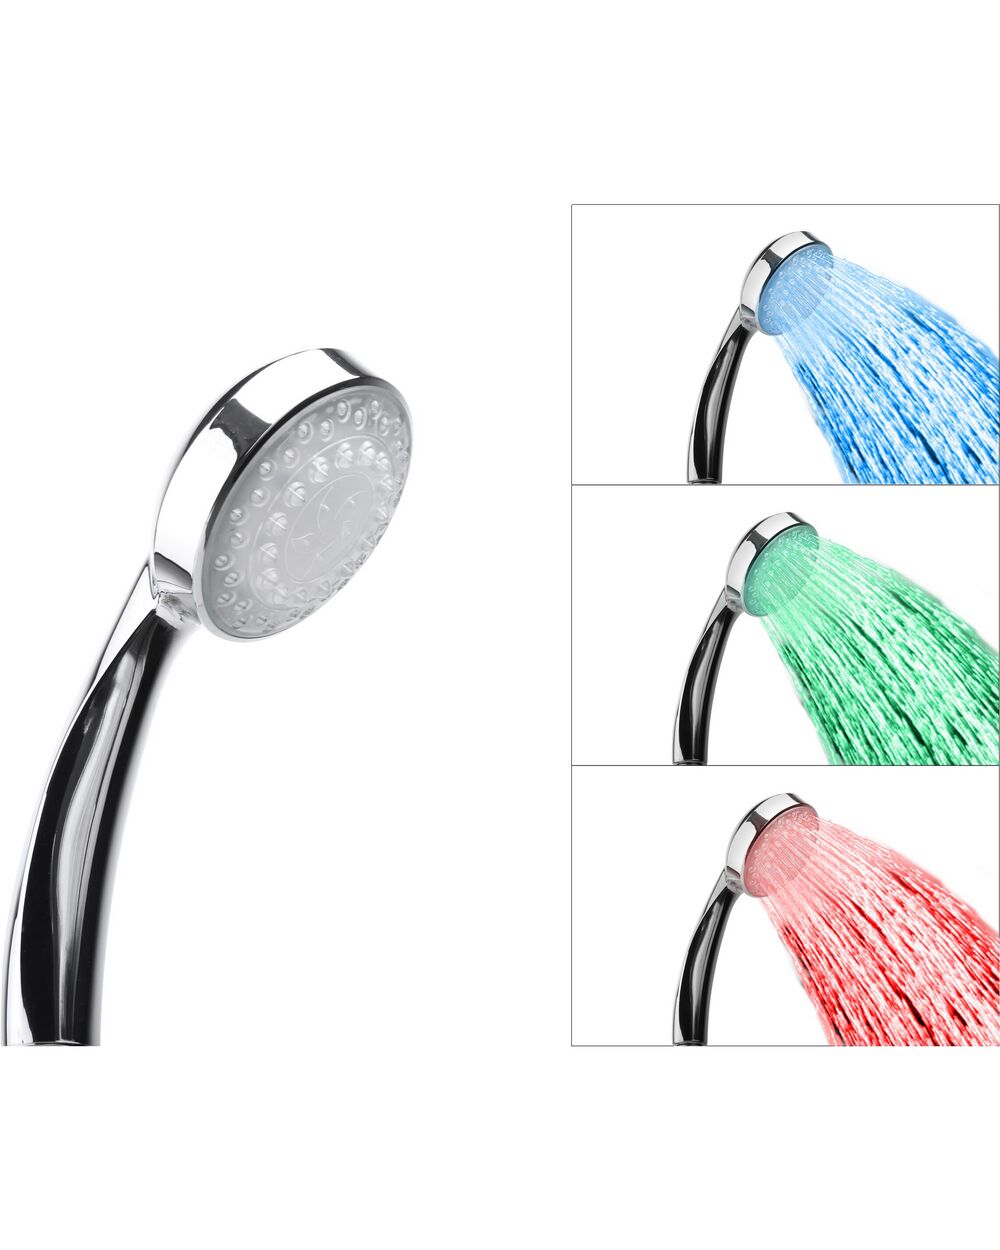 ▷ Alcachofa ducha led. Cambia de color según la temperatura del agua.